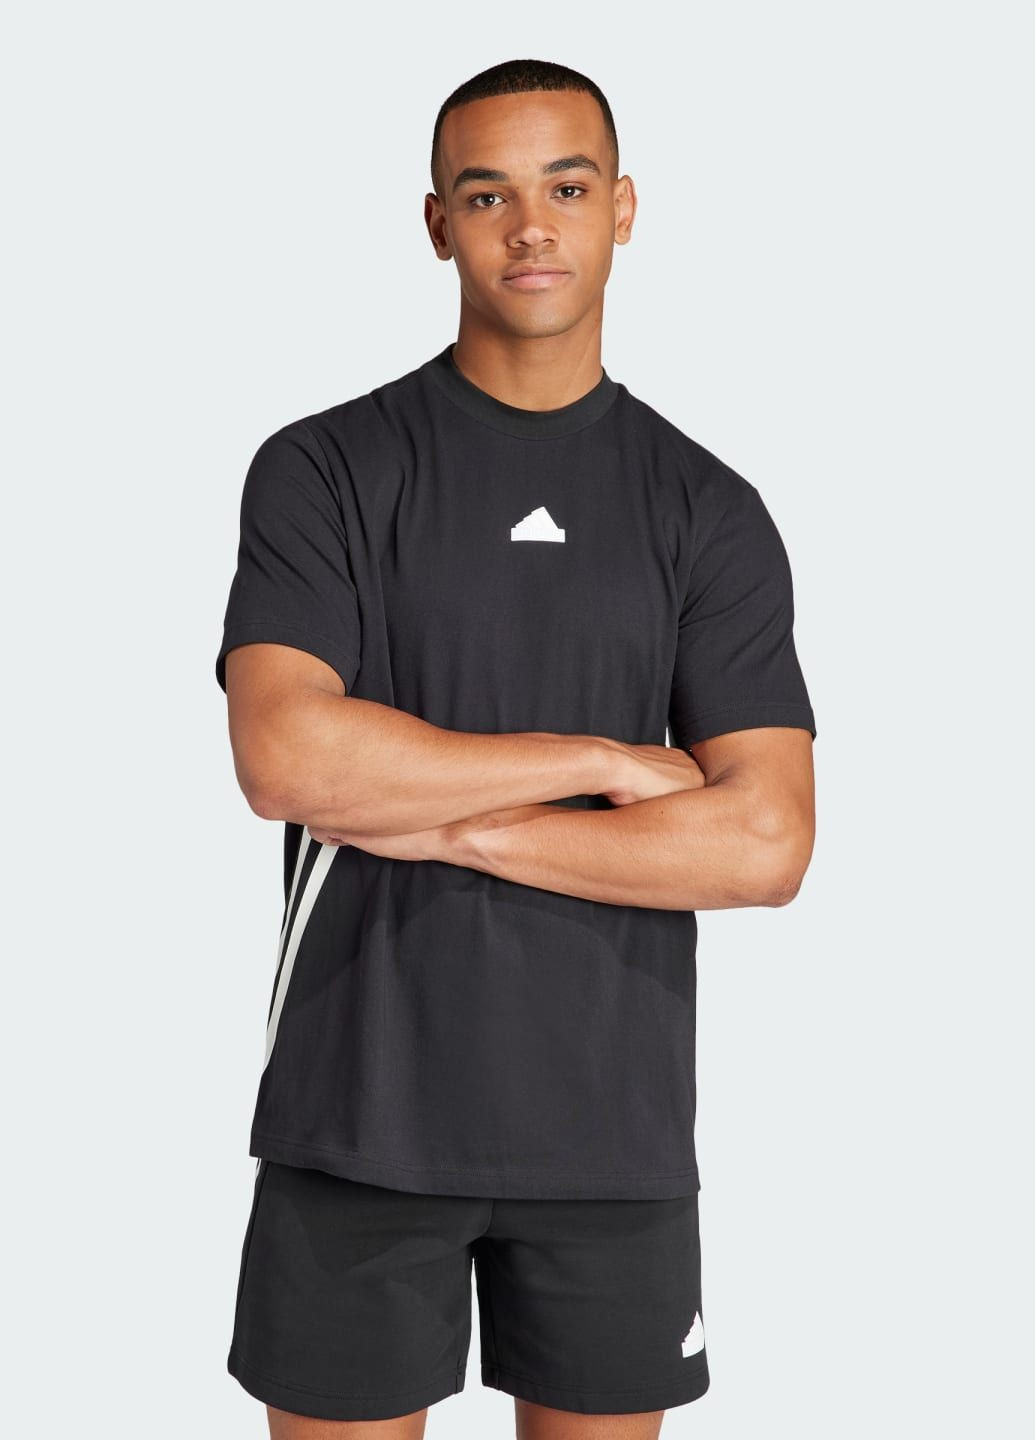 Черная футболка future icons 3-stripes adidas